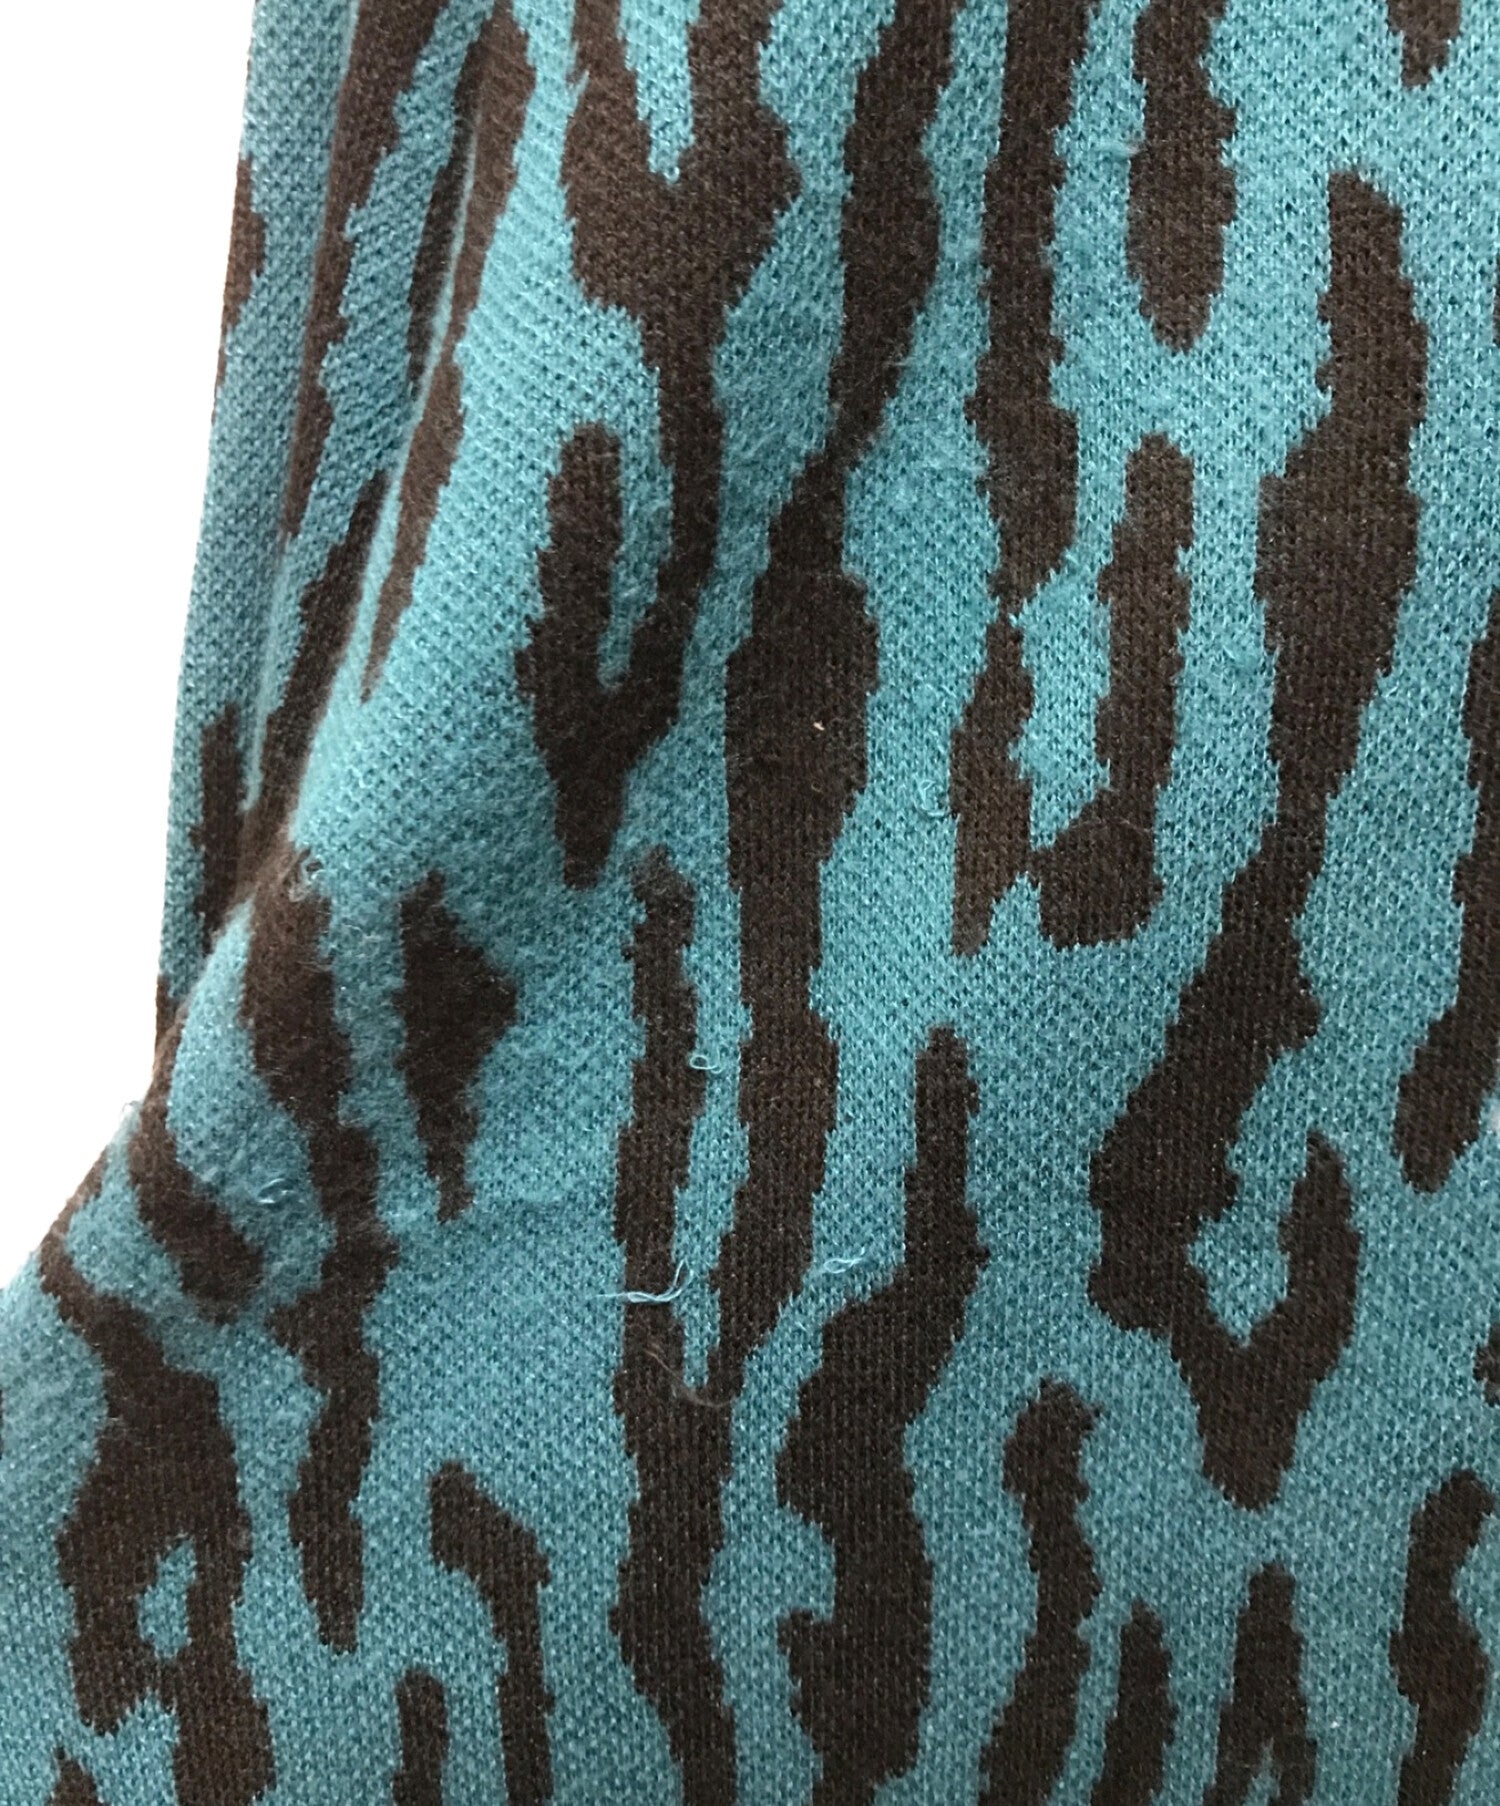 WACKO MARIA Leopard Knit Polo Shirt 22fw-wmk-kn21 | Archive Factory